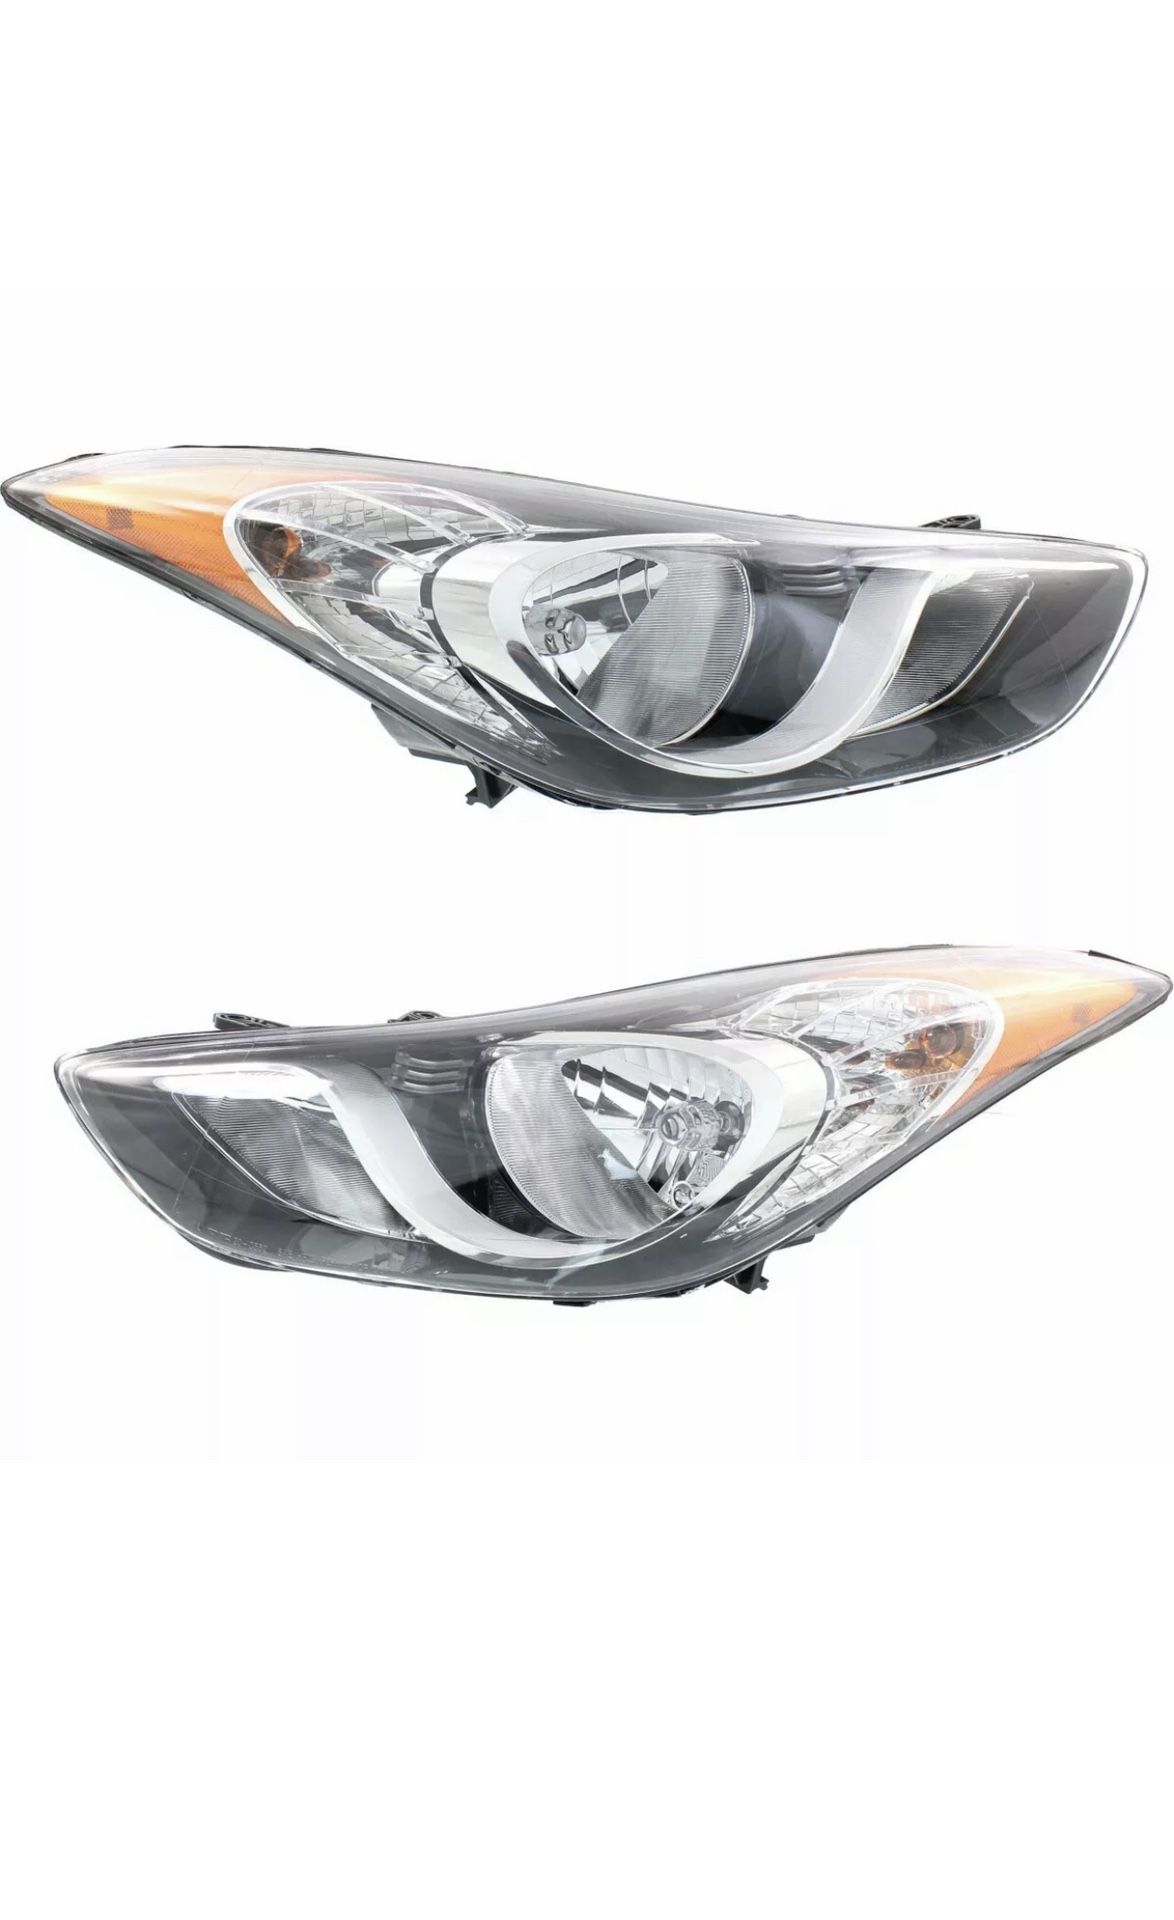 2011 2012 2013 Hyundai Elantra headlight. New!!